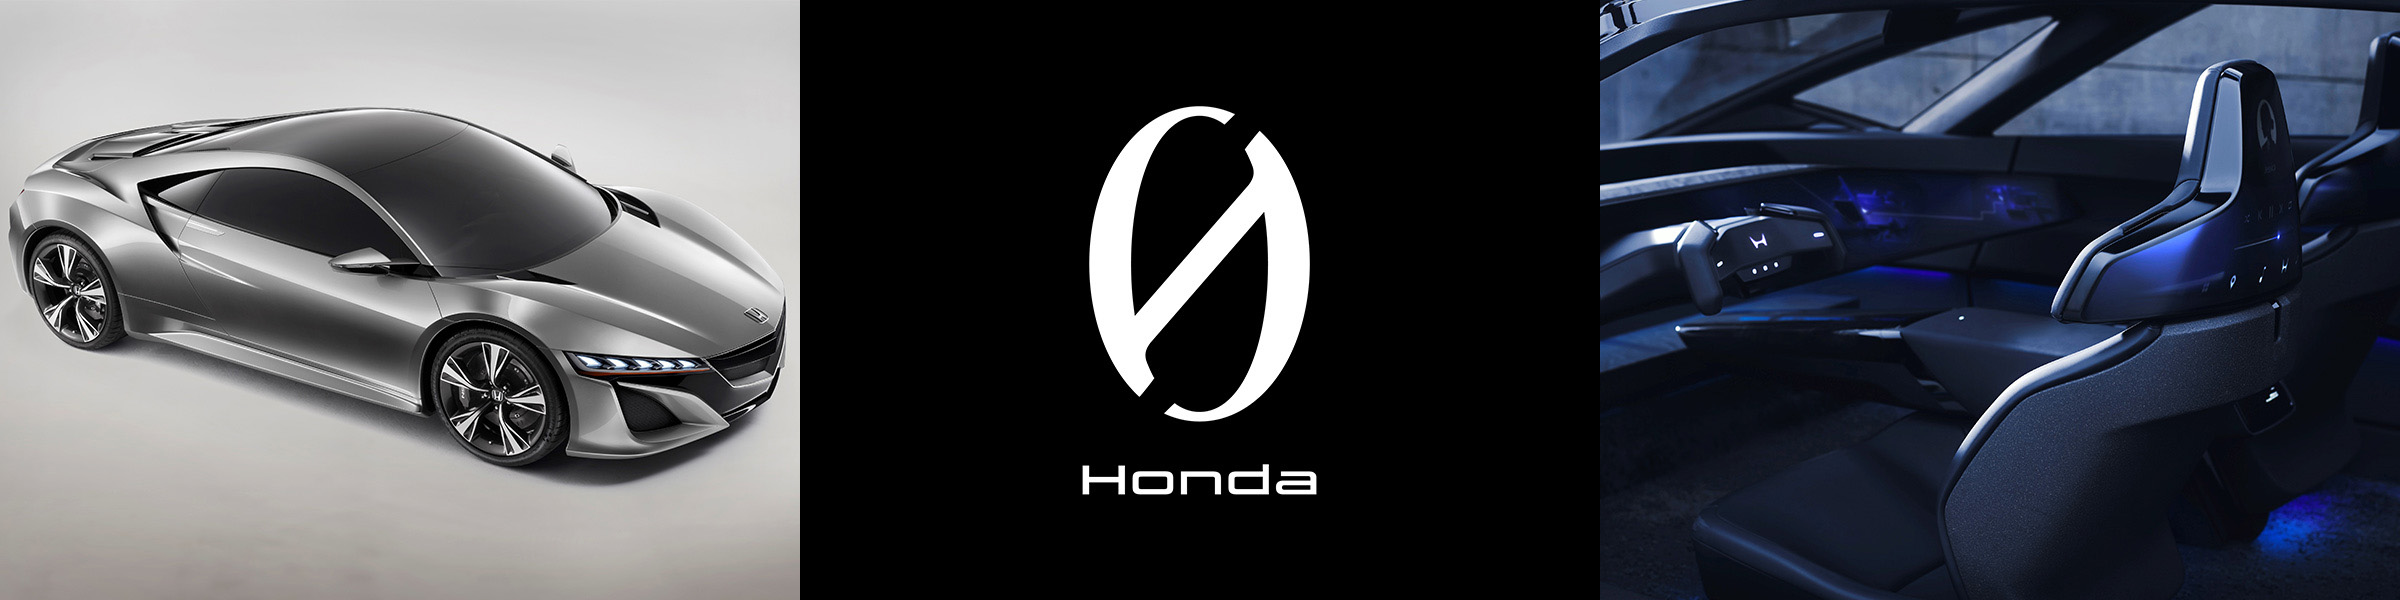 New Honda 0 Series